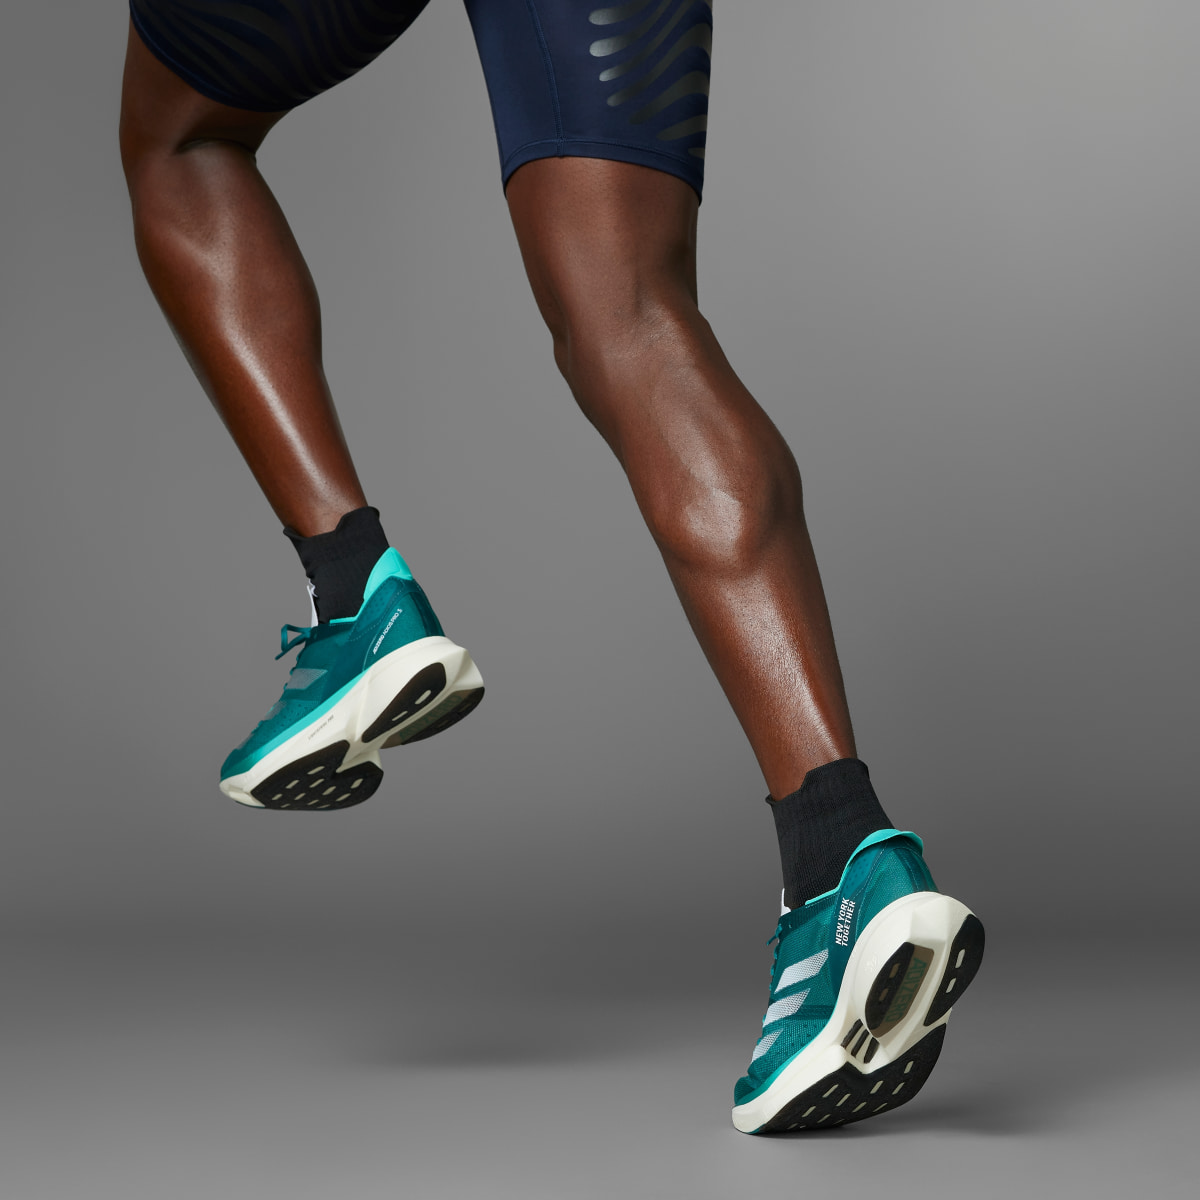 Adidas Adizero Adios Pro 3 Running Shoes. 8